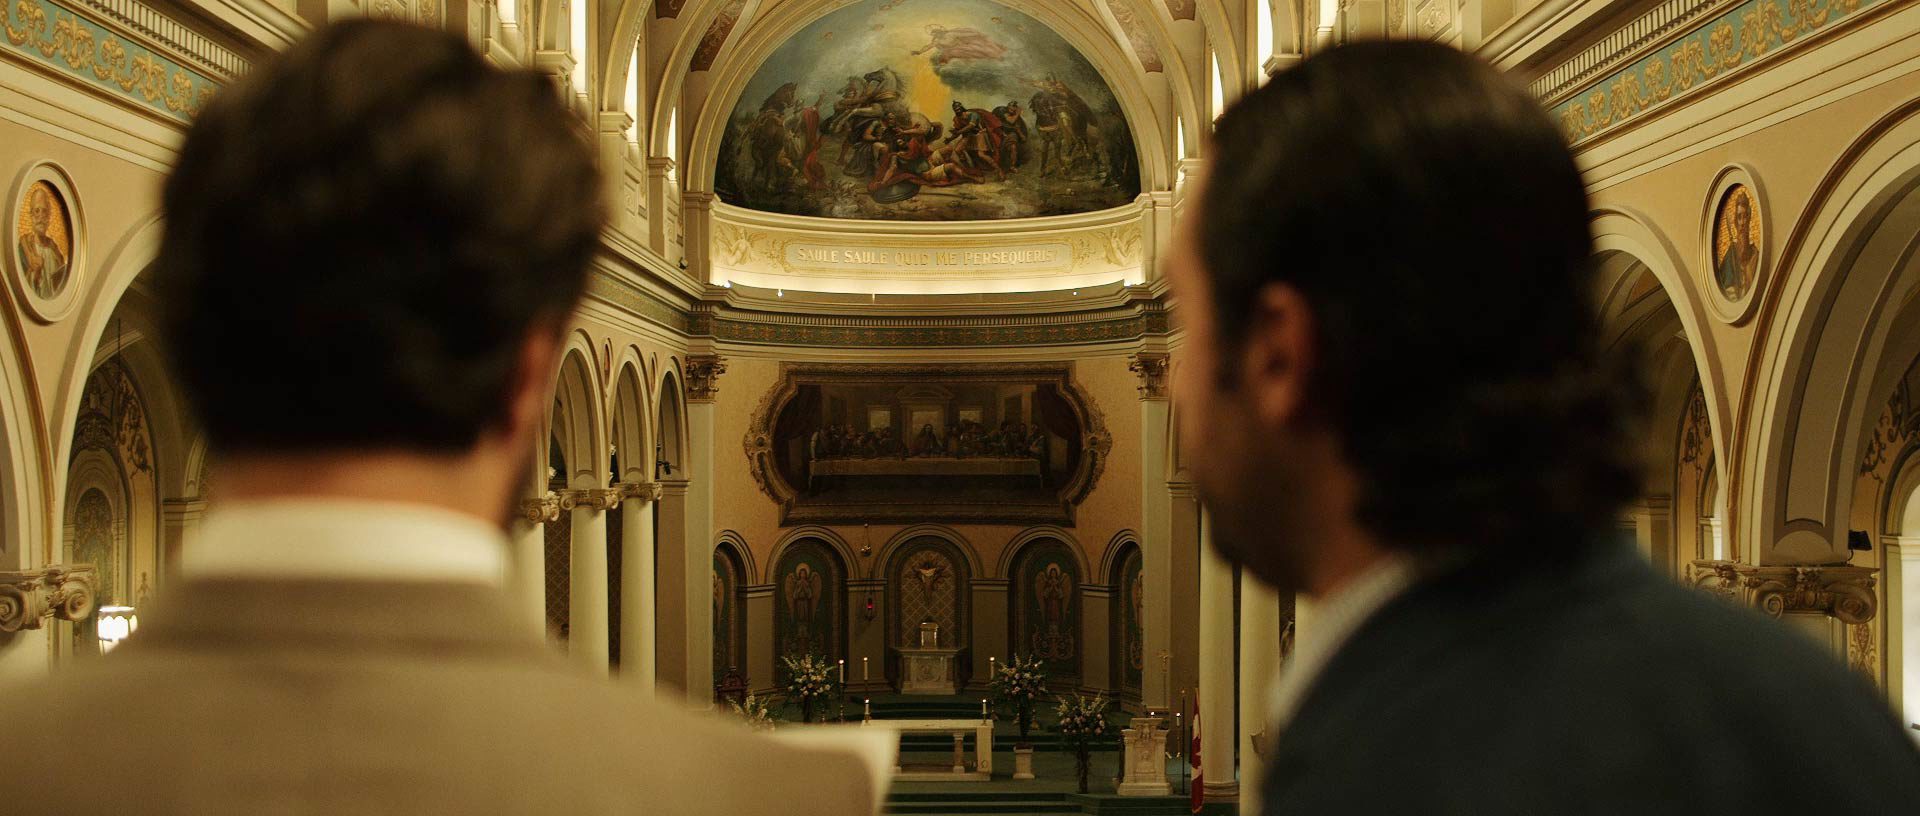 St. Paul's Basilica Wedding Videography